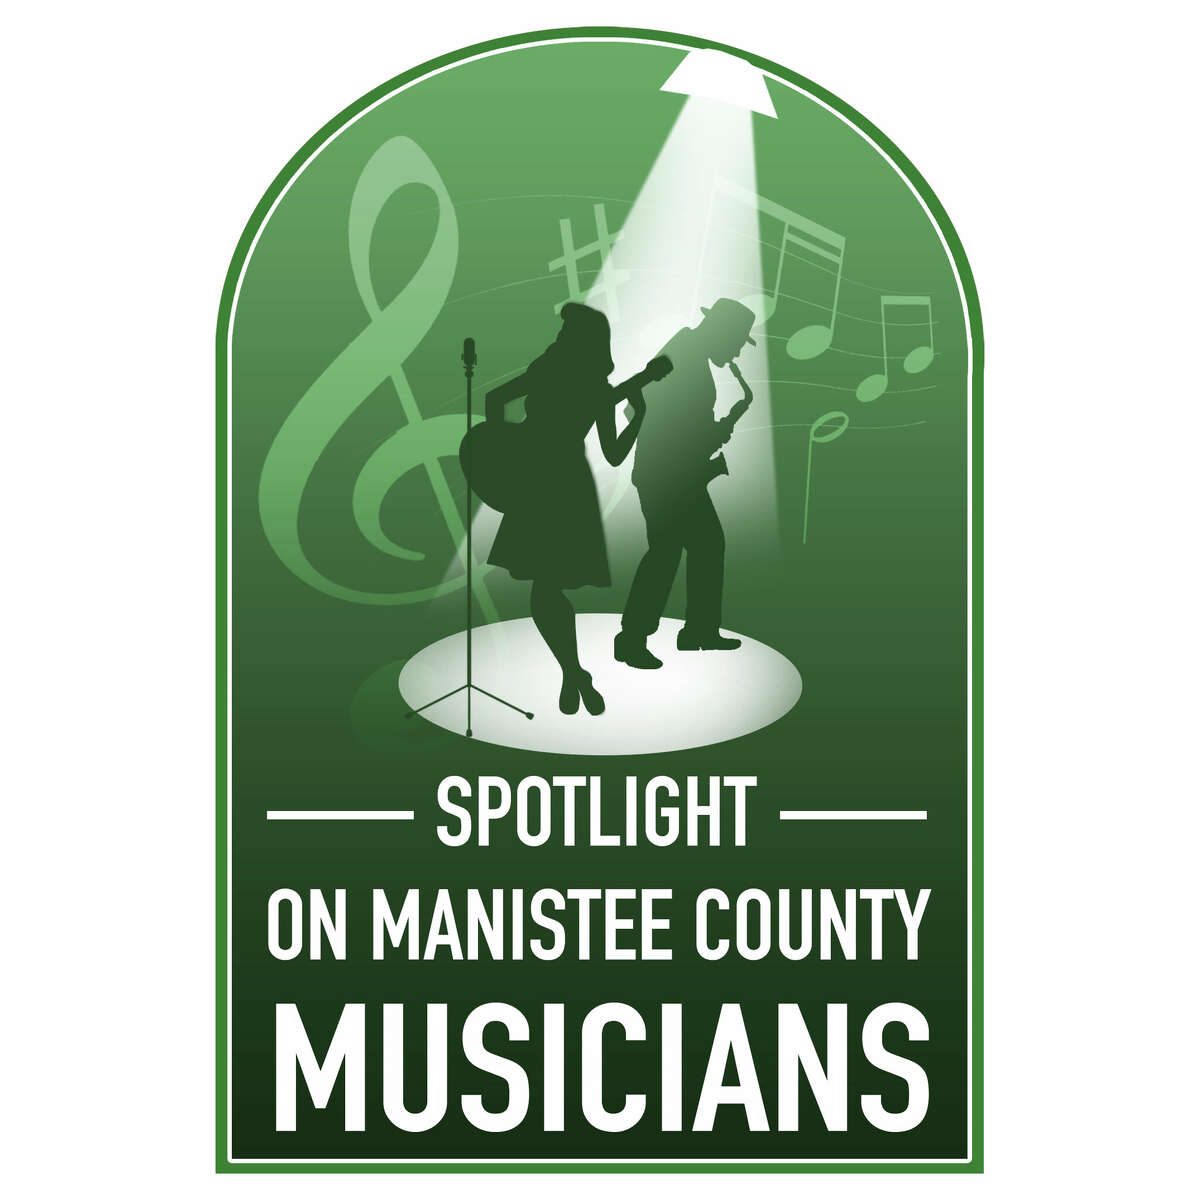 Spotlight on Manistee County Musicians